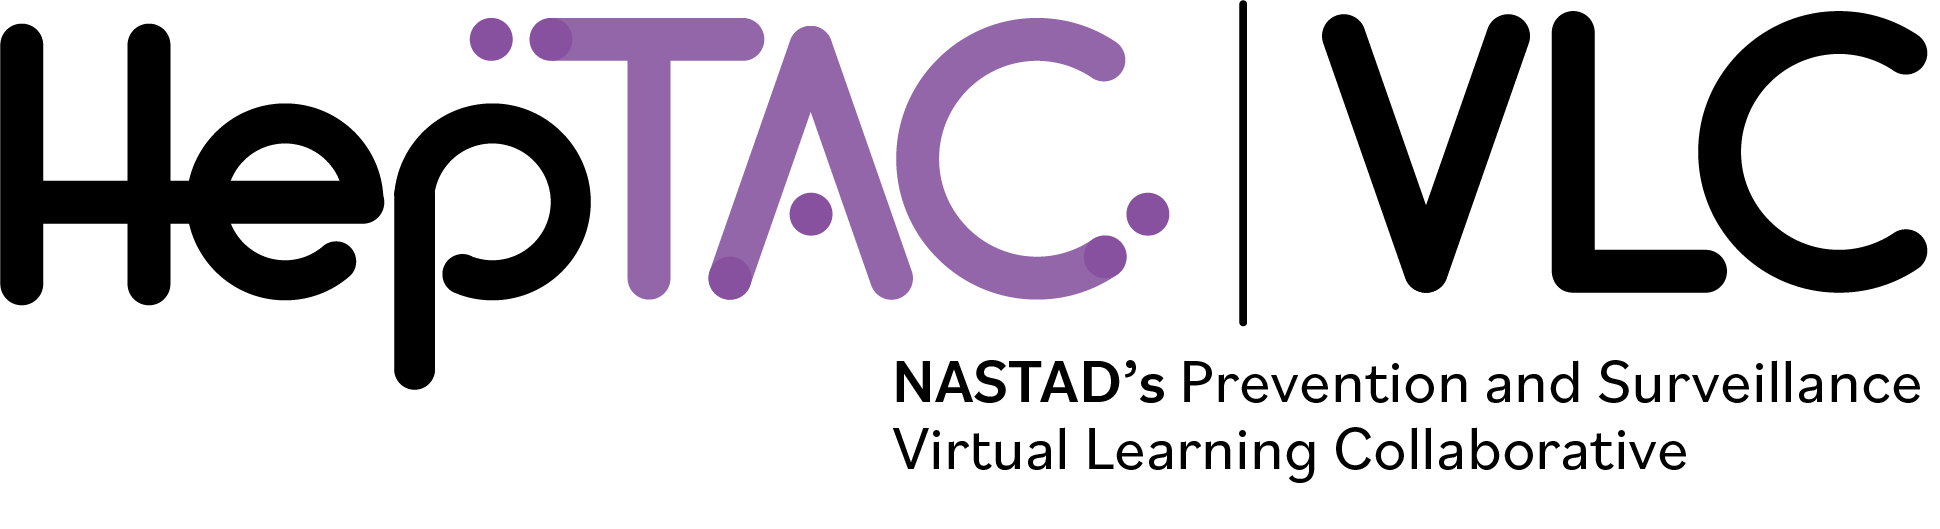 HepTAC Virtual Learning Collaborative Logo_Horizonatal